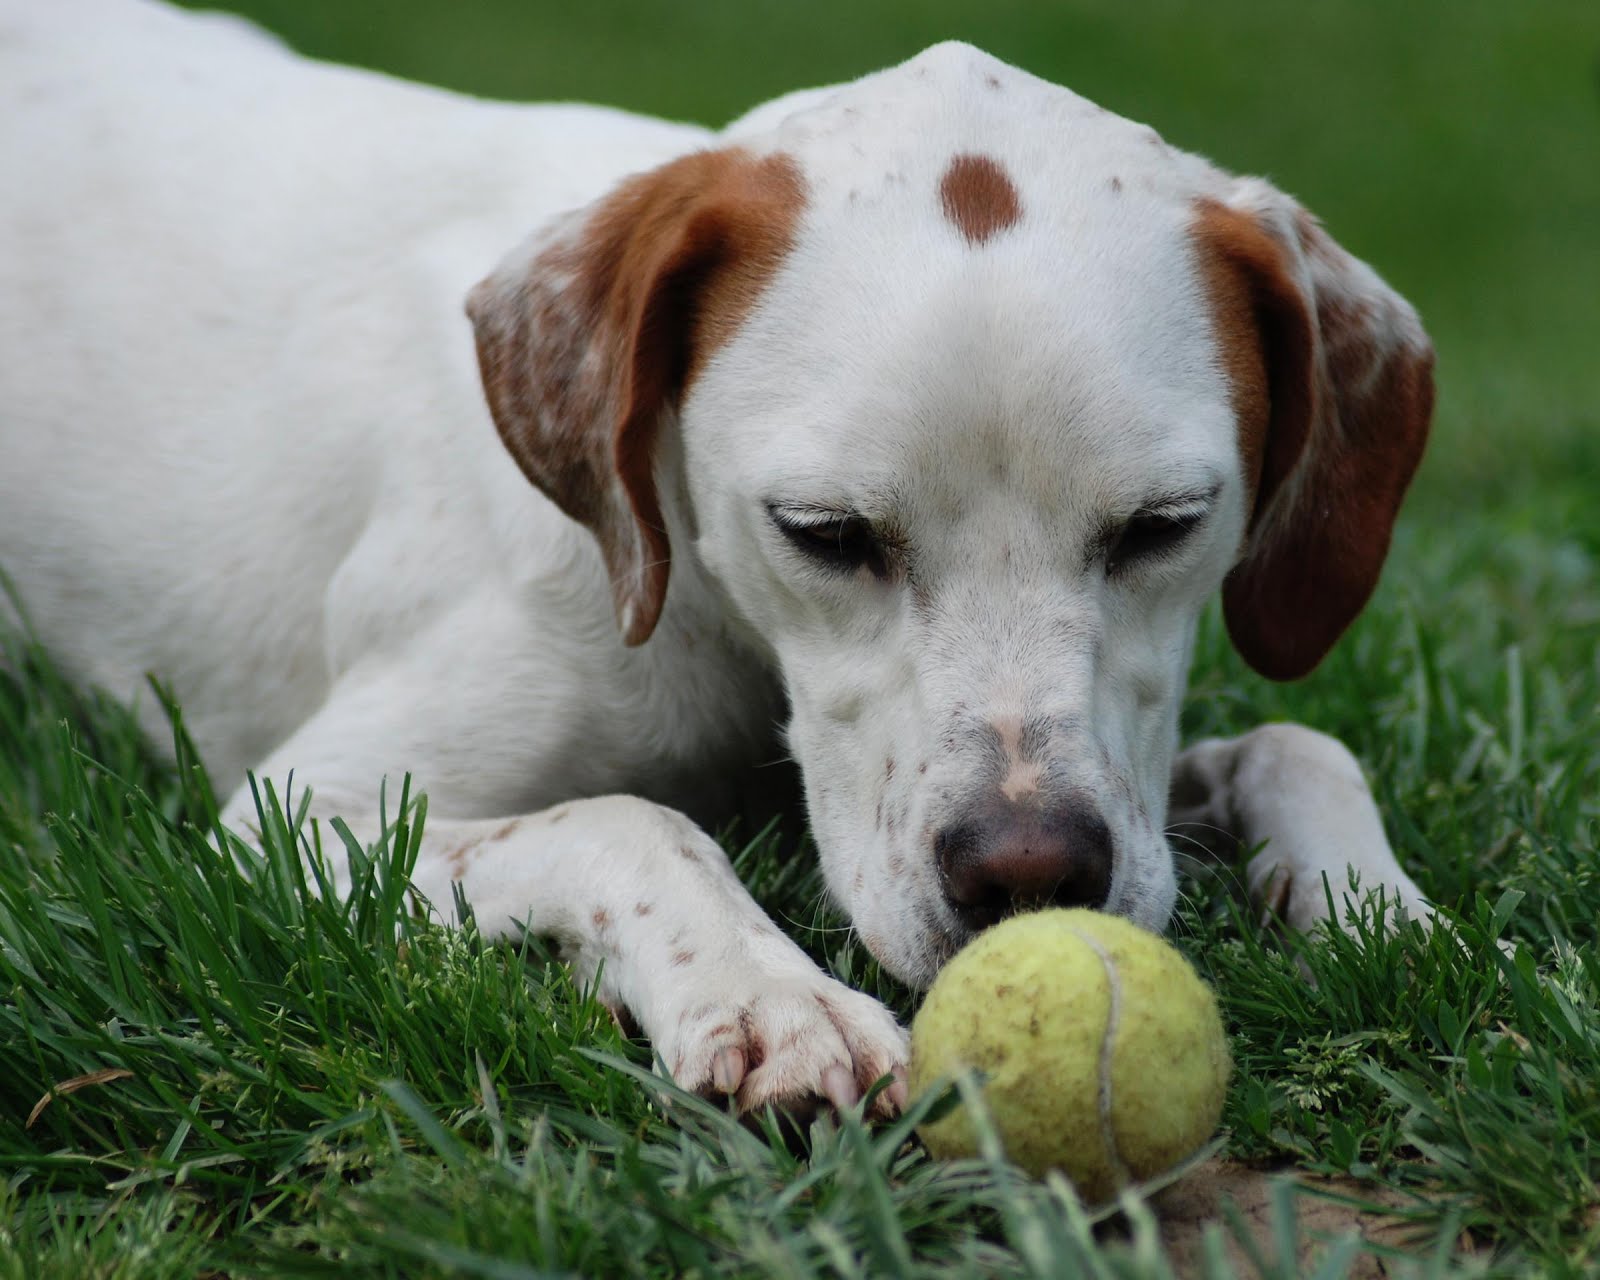 Fotos de cachorros: Cachorros brincando de bola